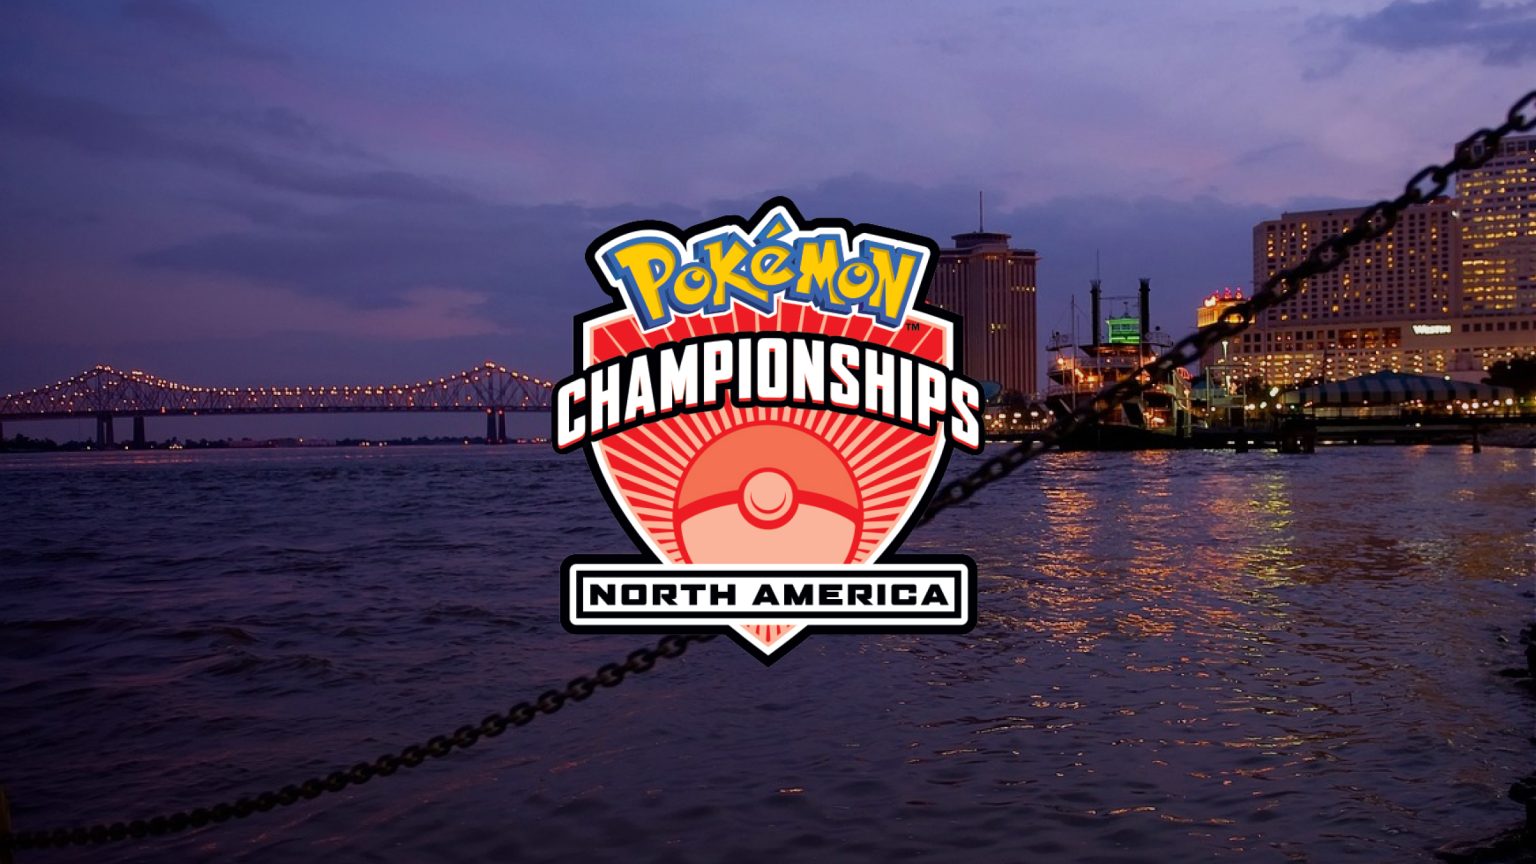 Addressing Allegations of Harassment at North America International Championship in Pokémon Community